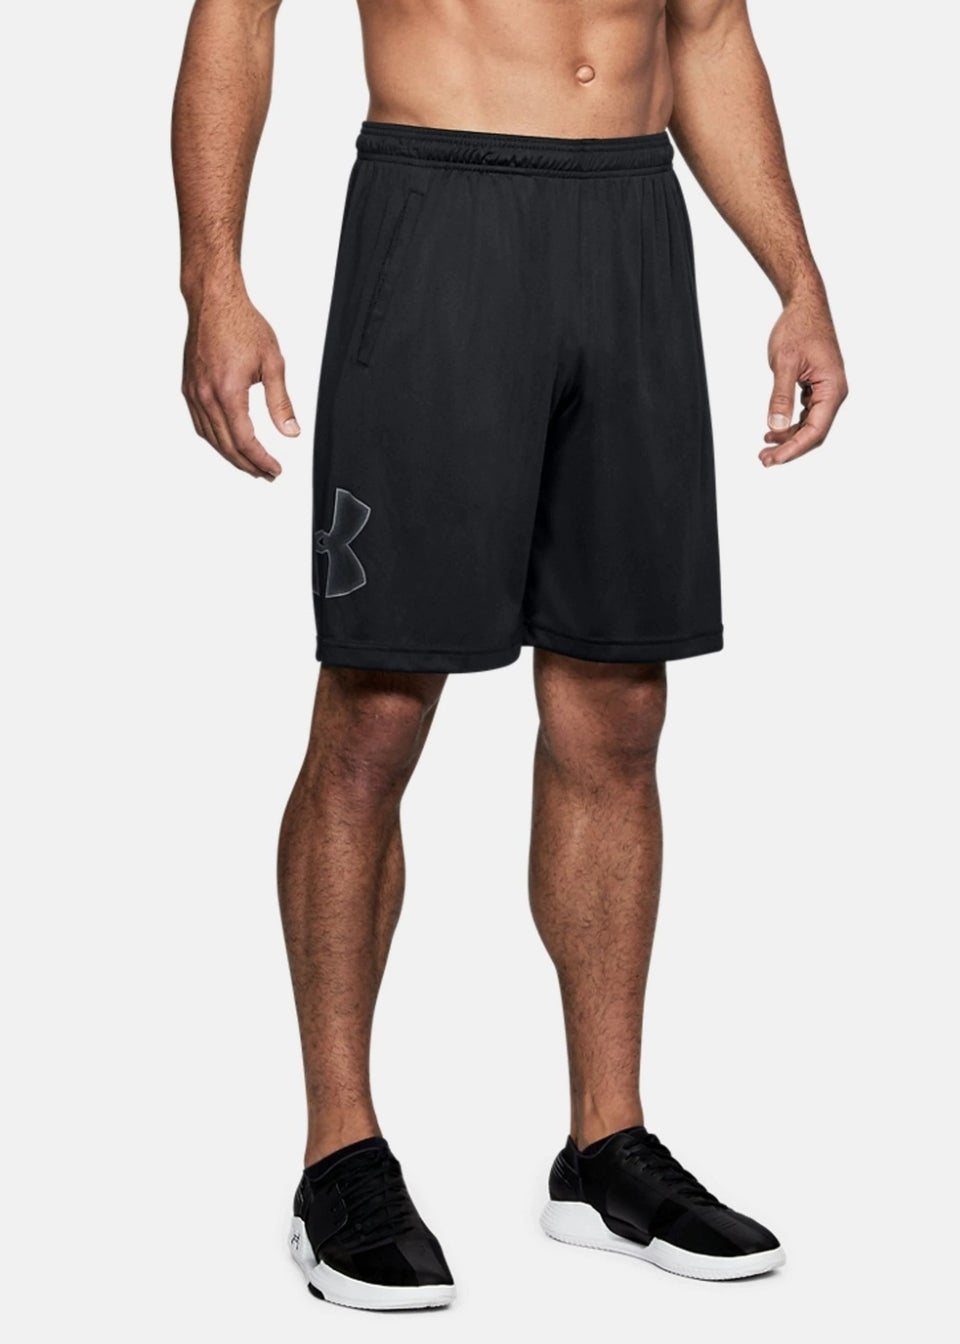 Under Armour Black/Grey Tech Shorts